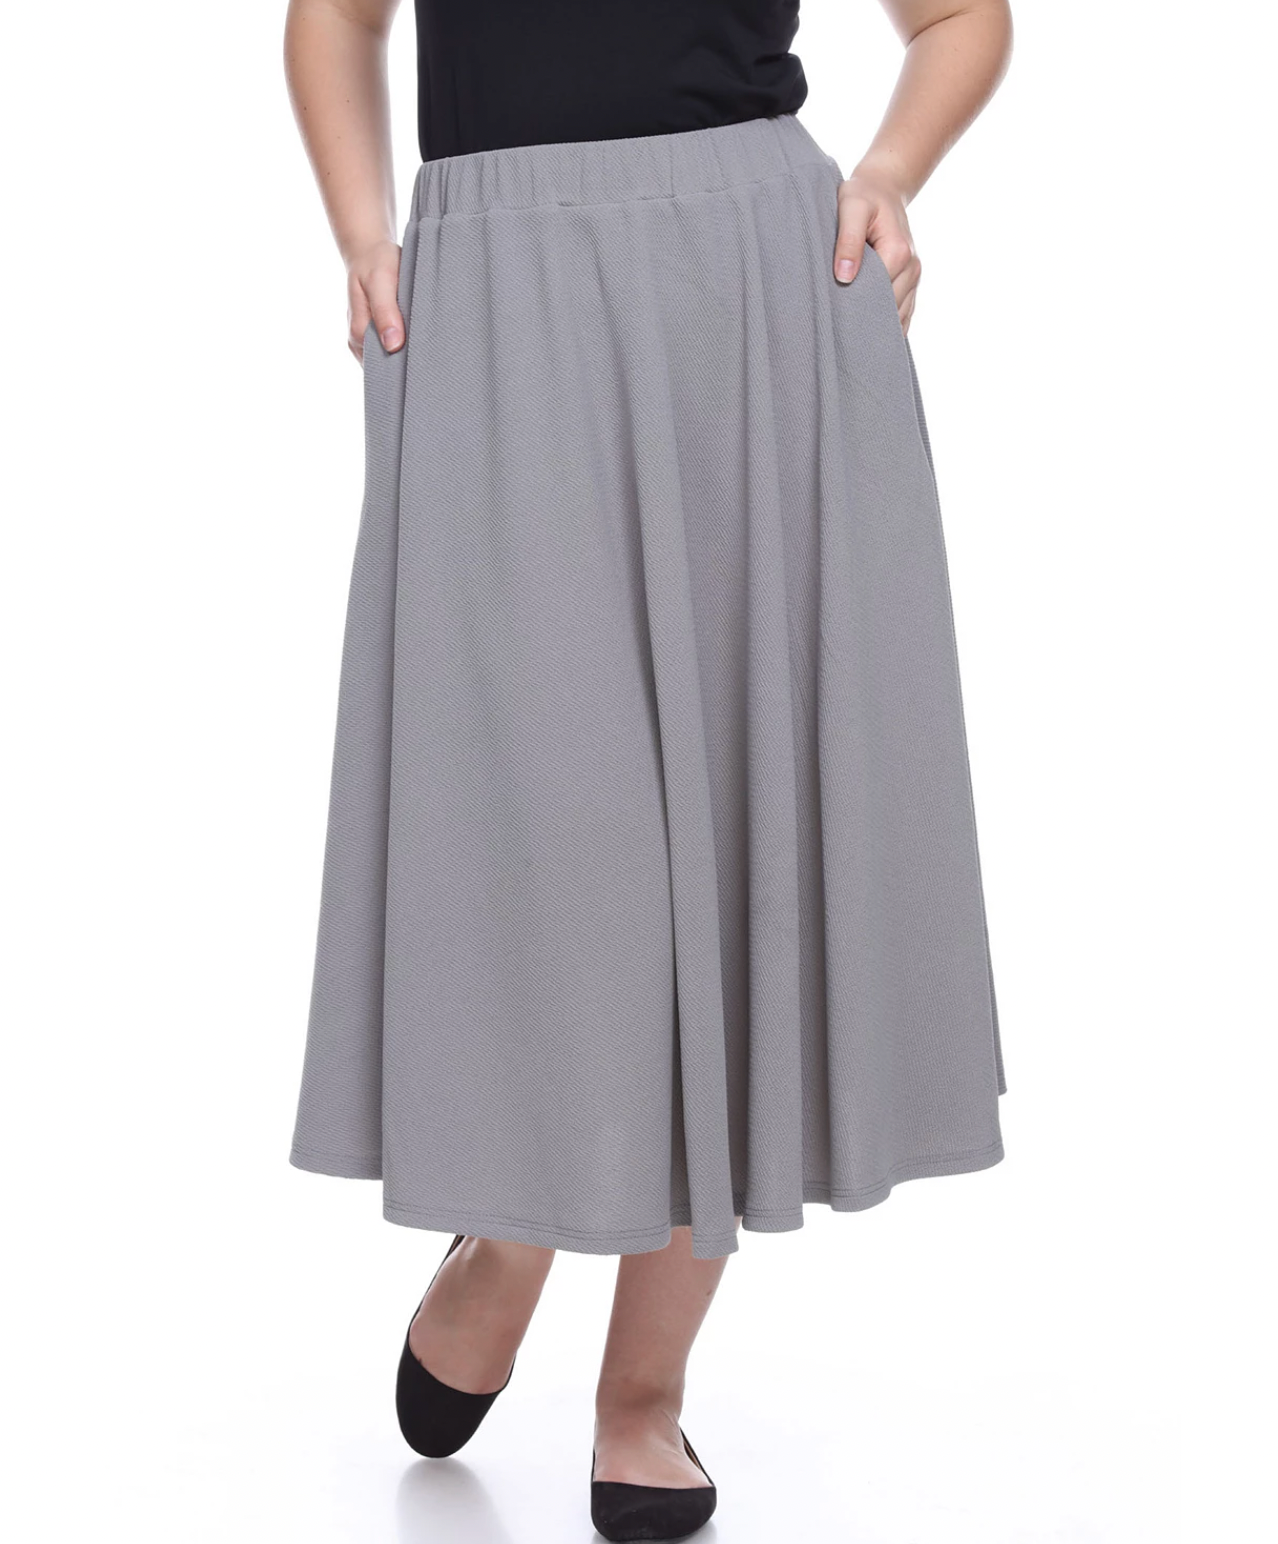 Urban Coco High Waist Pleated Midi Skirt